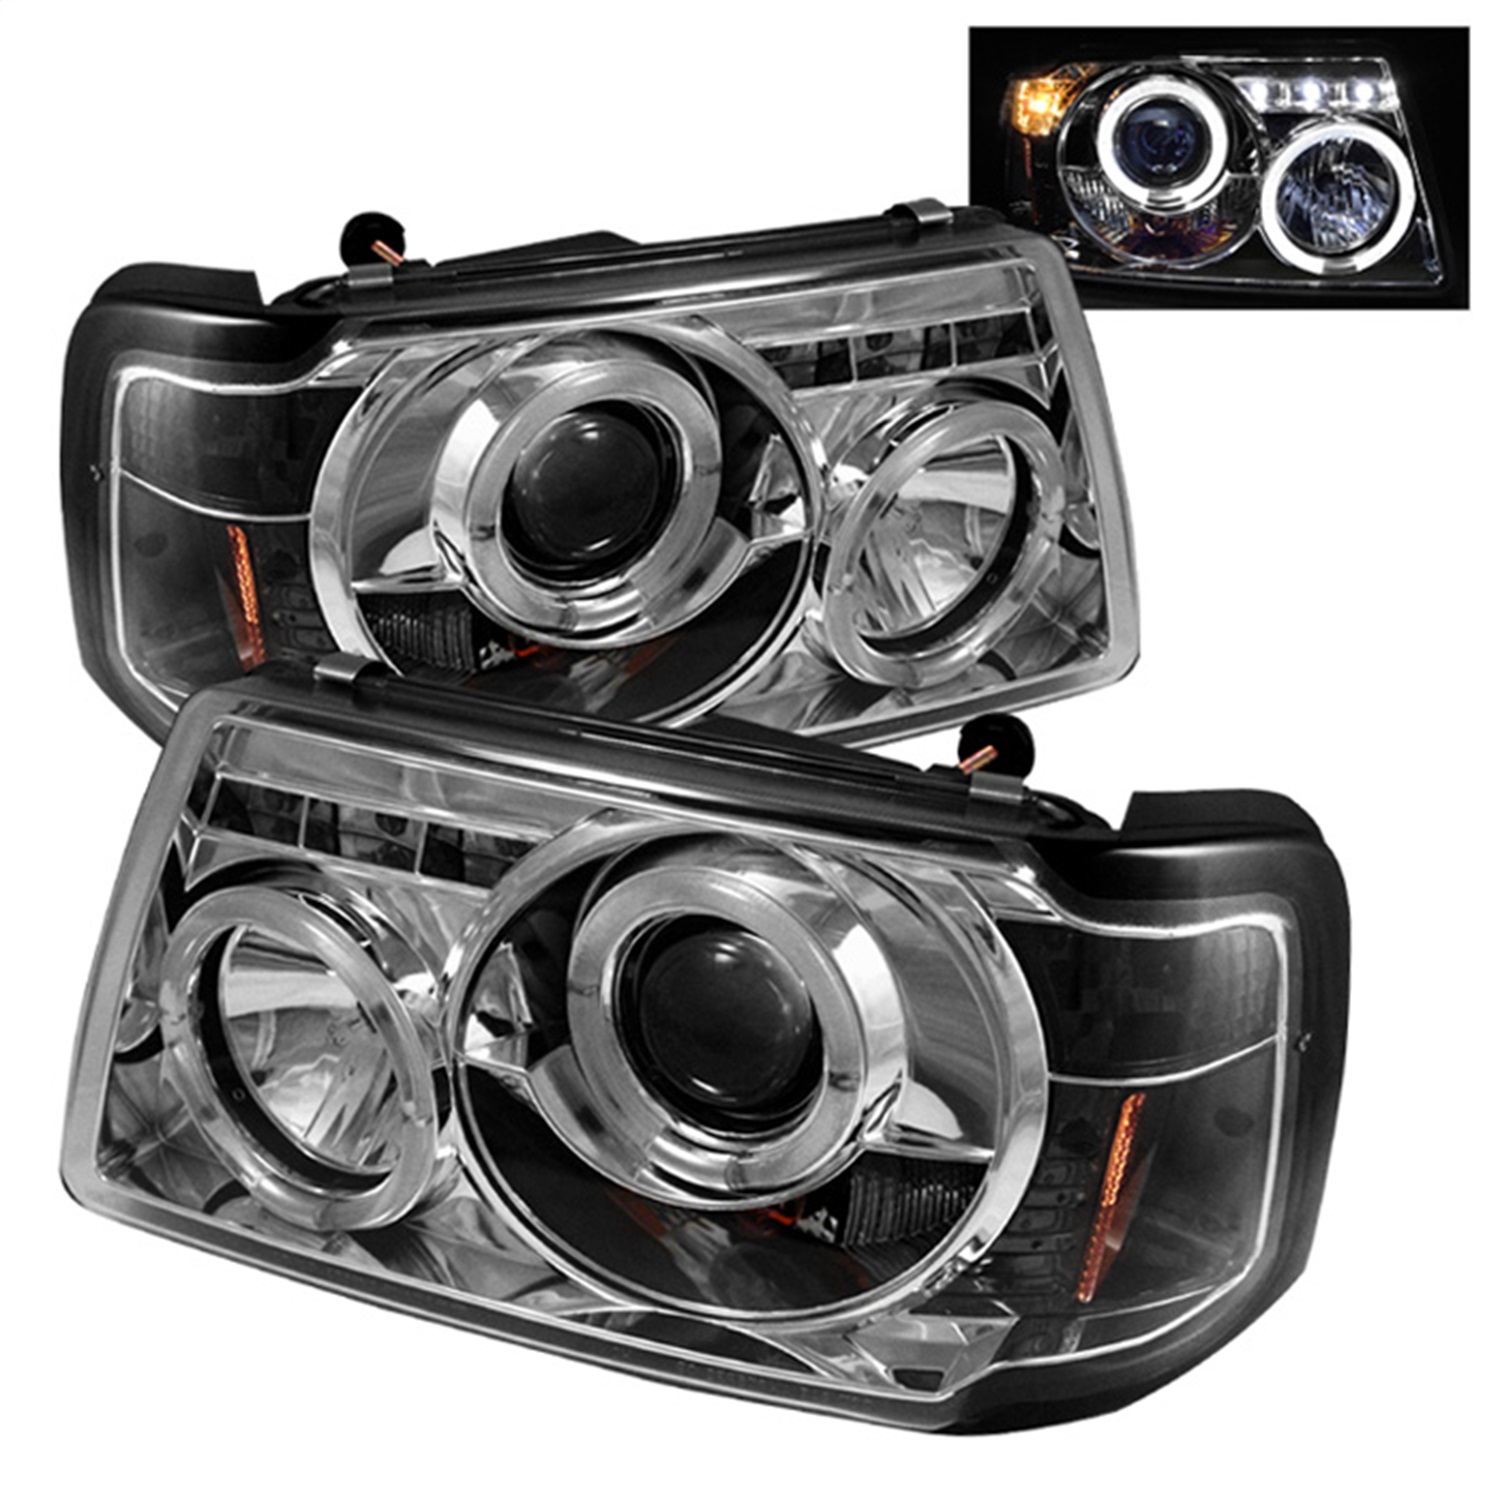 Spyder Auto 5010506 Halo LED Projector Headlights Fits 01-11 Ranger